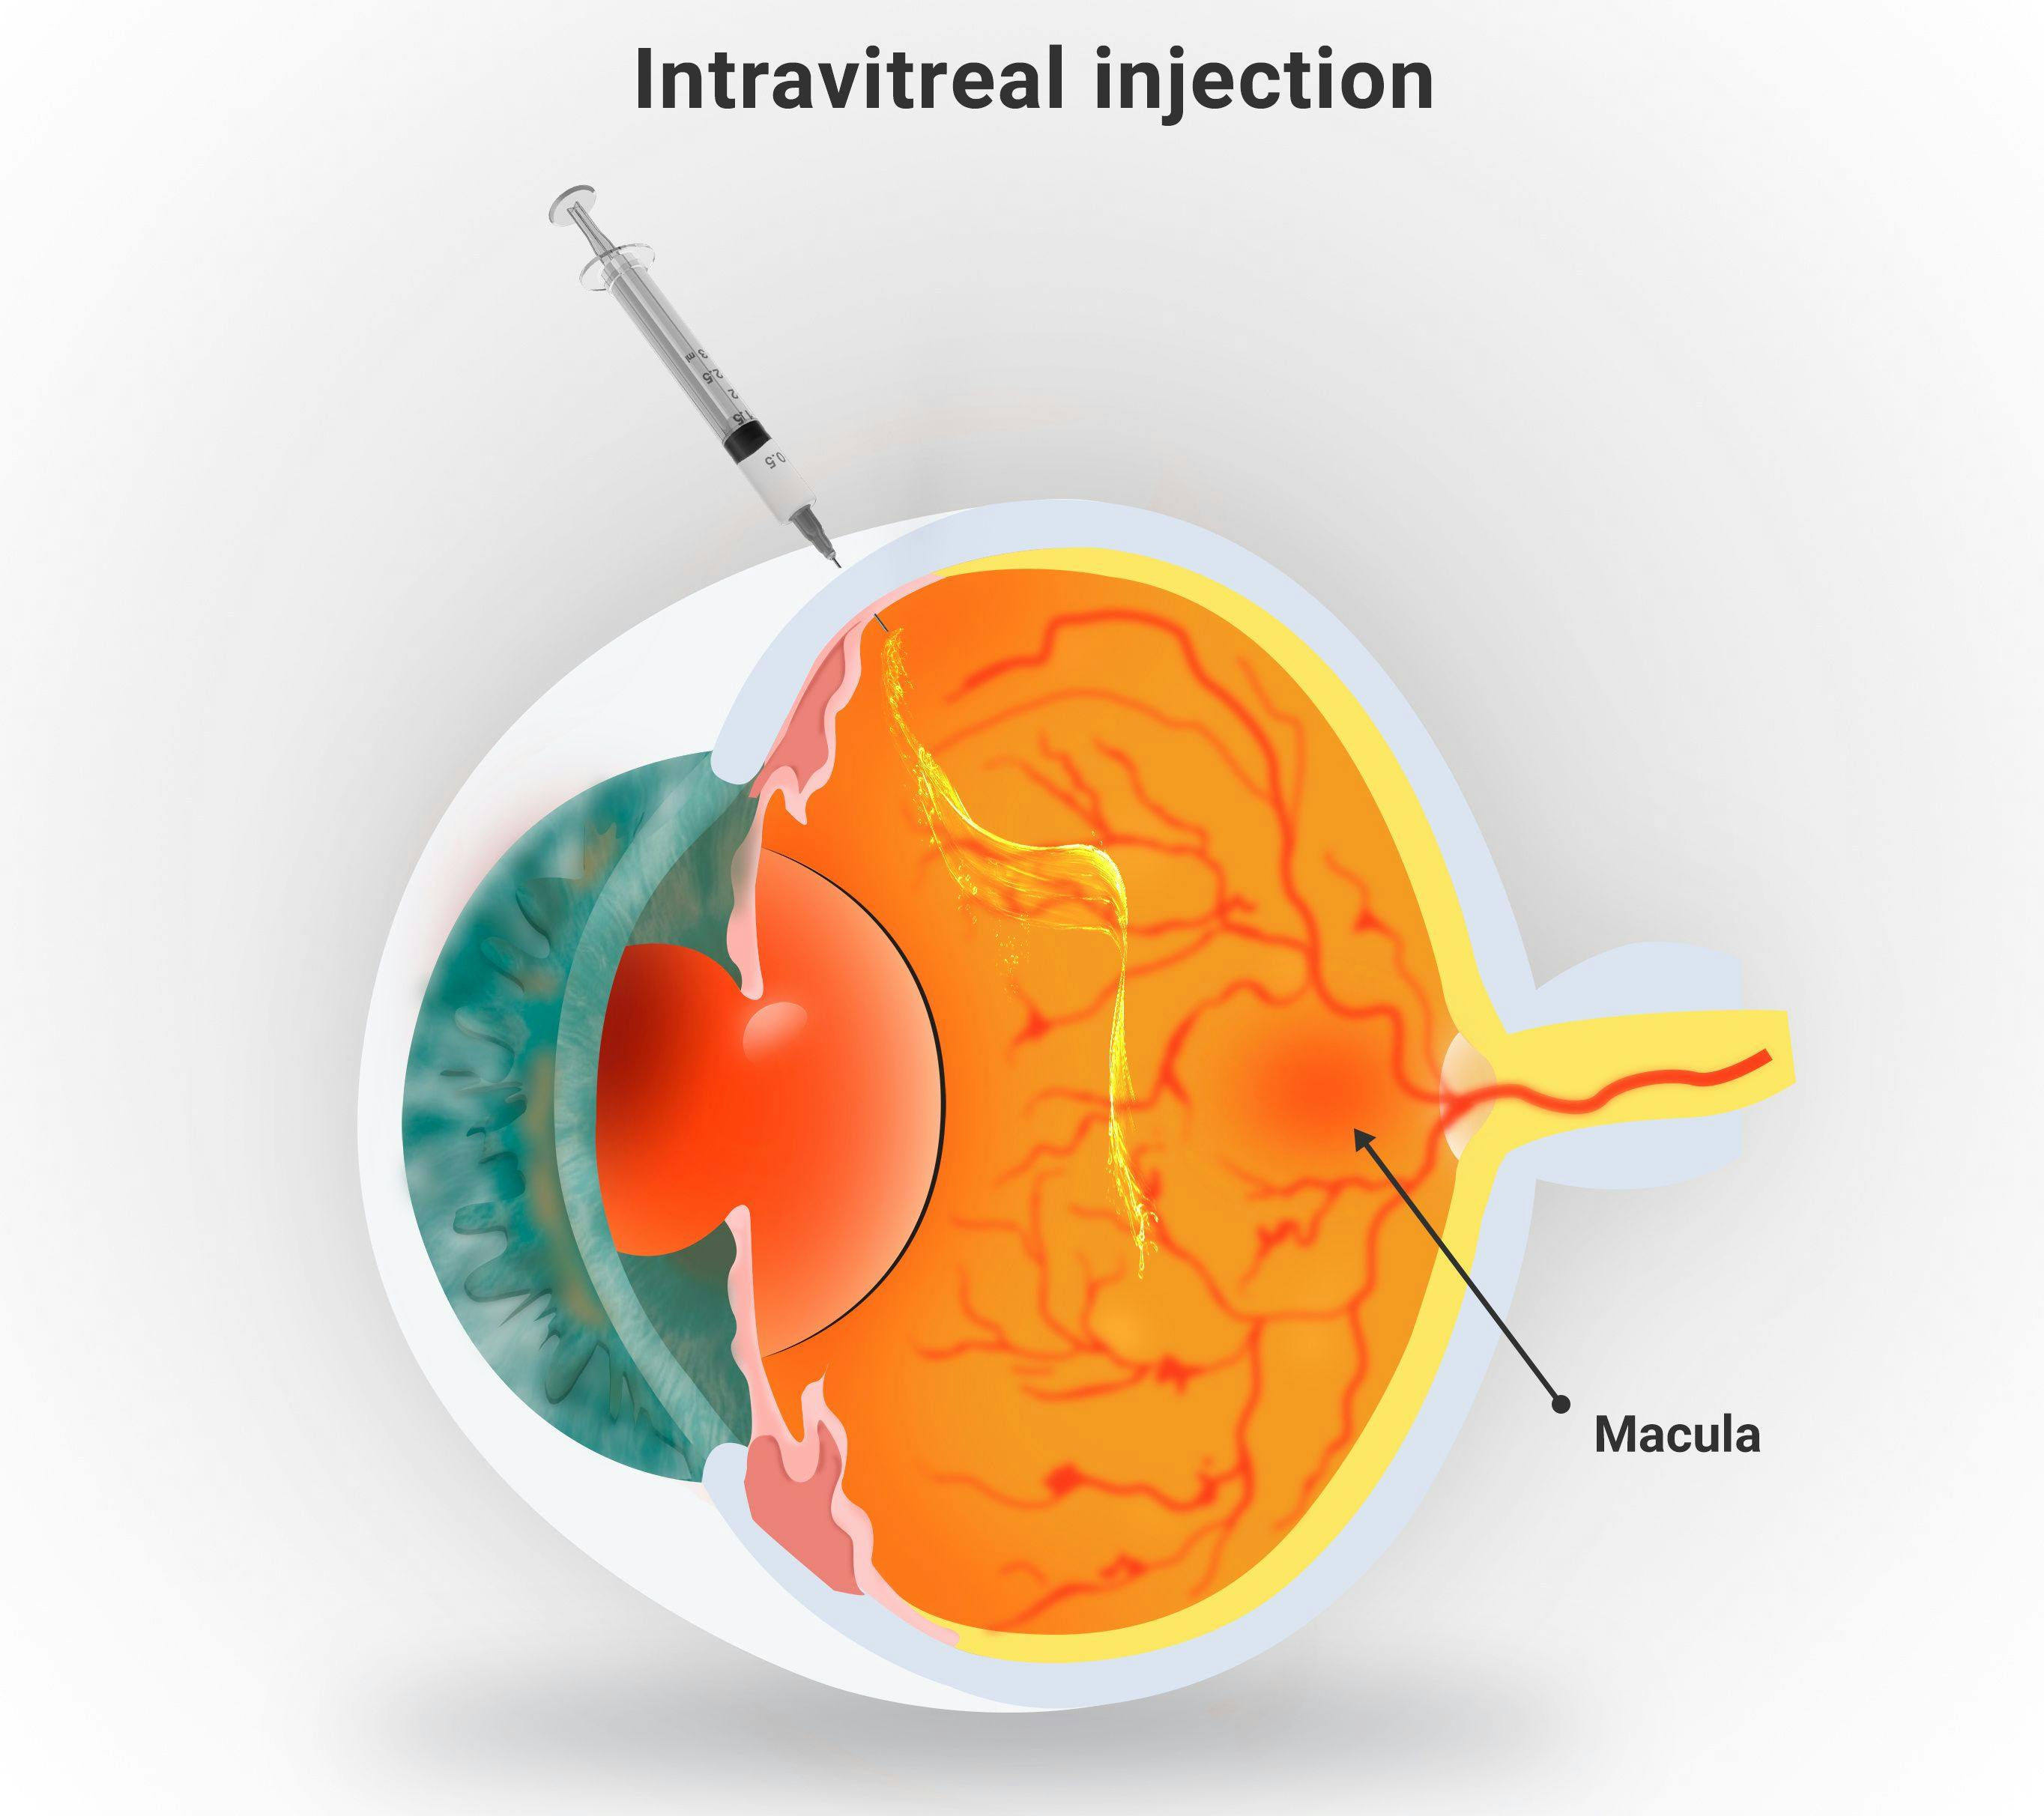 Intravitreal Injection Procedure for Macular Degeneration | Image credit: AngeloSouza - stock.adobe.com